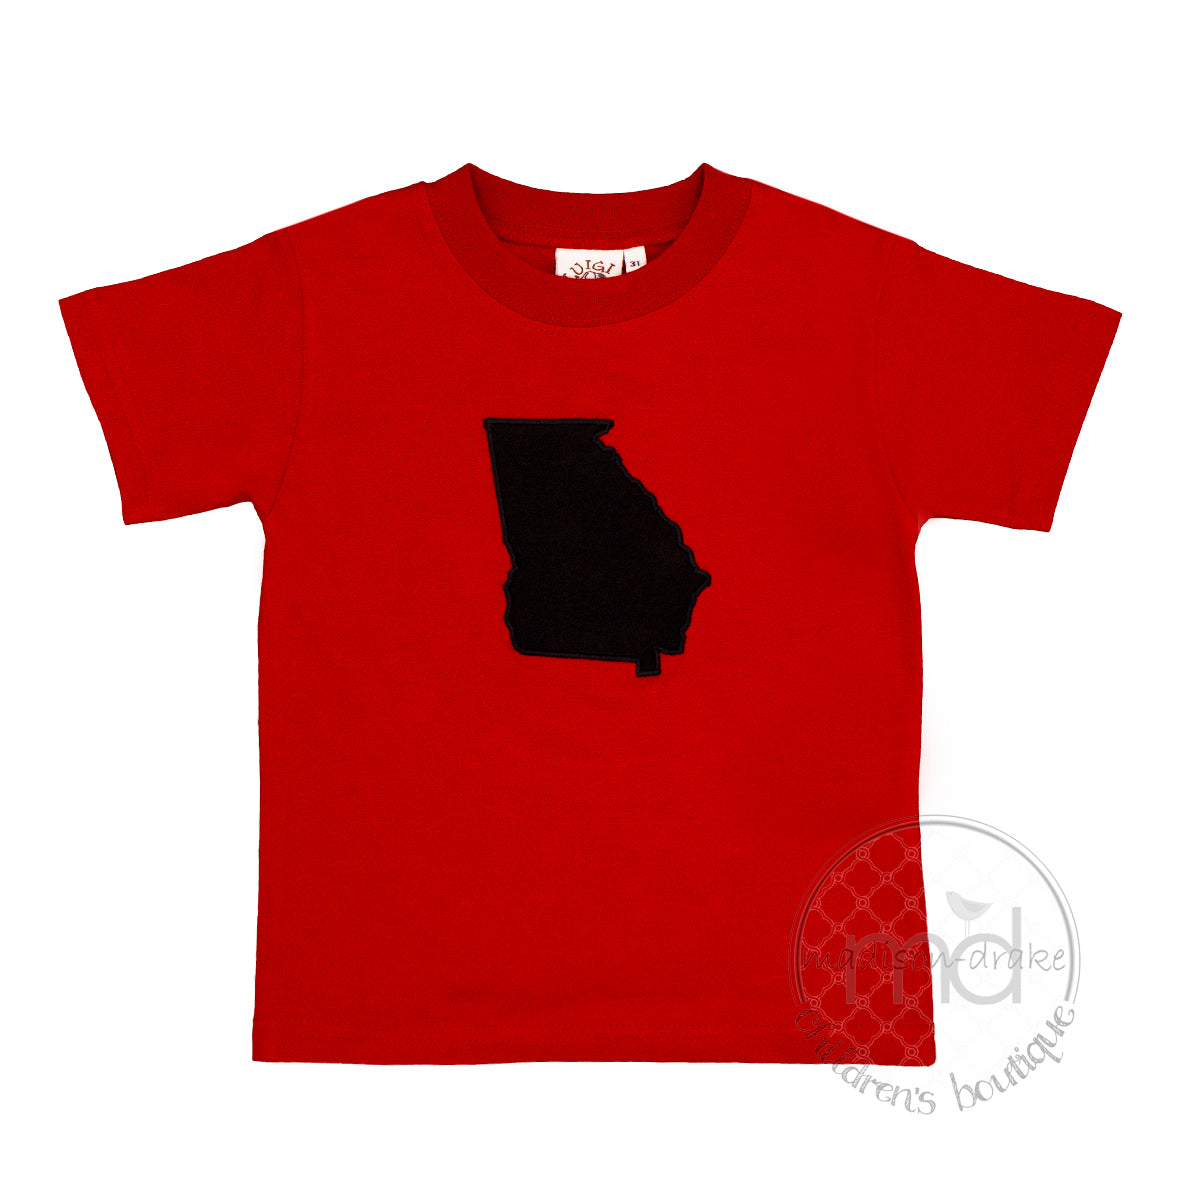 Little Boy's Appliqued State of Georgia Shirt by Luigi Kids